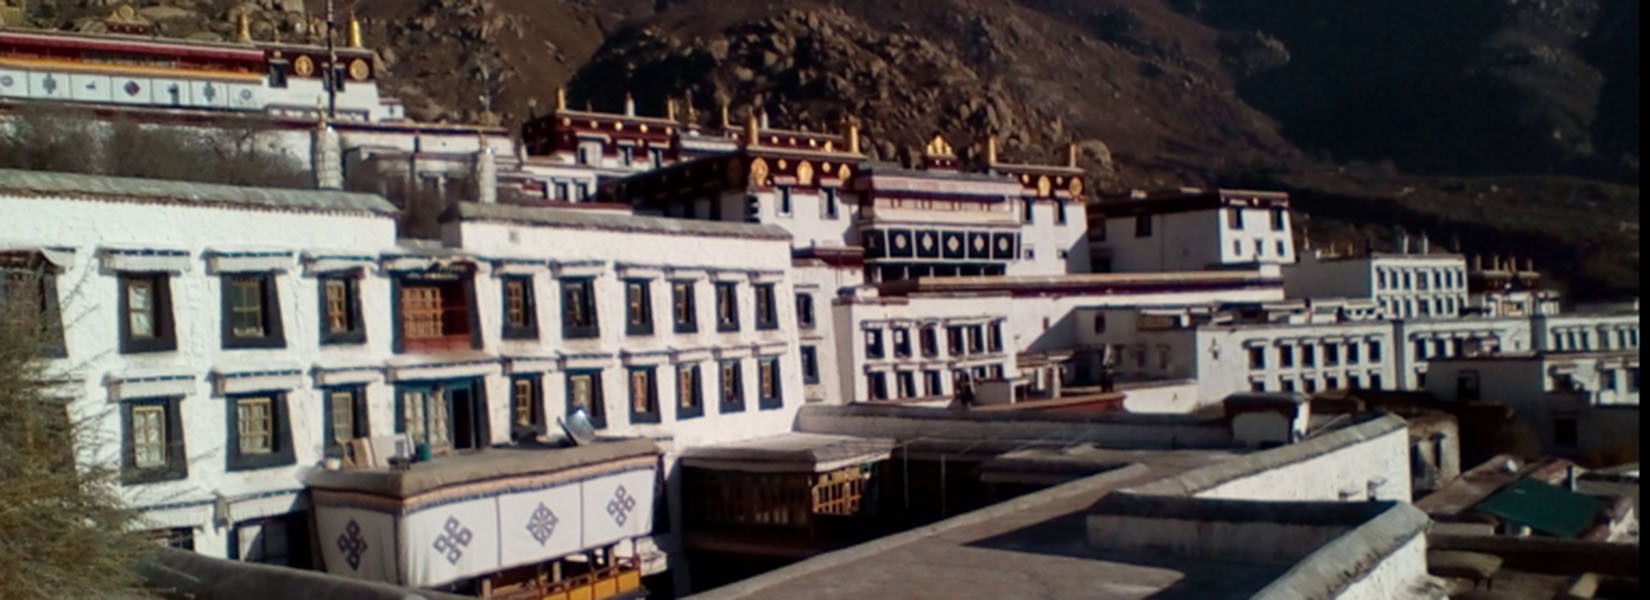 Tibet Tour Banner Image